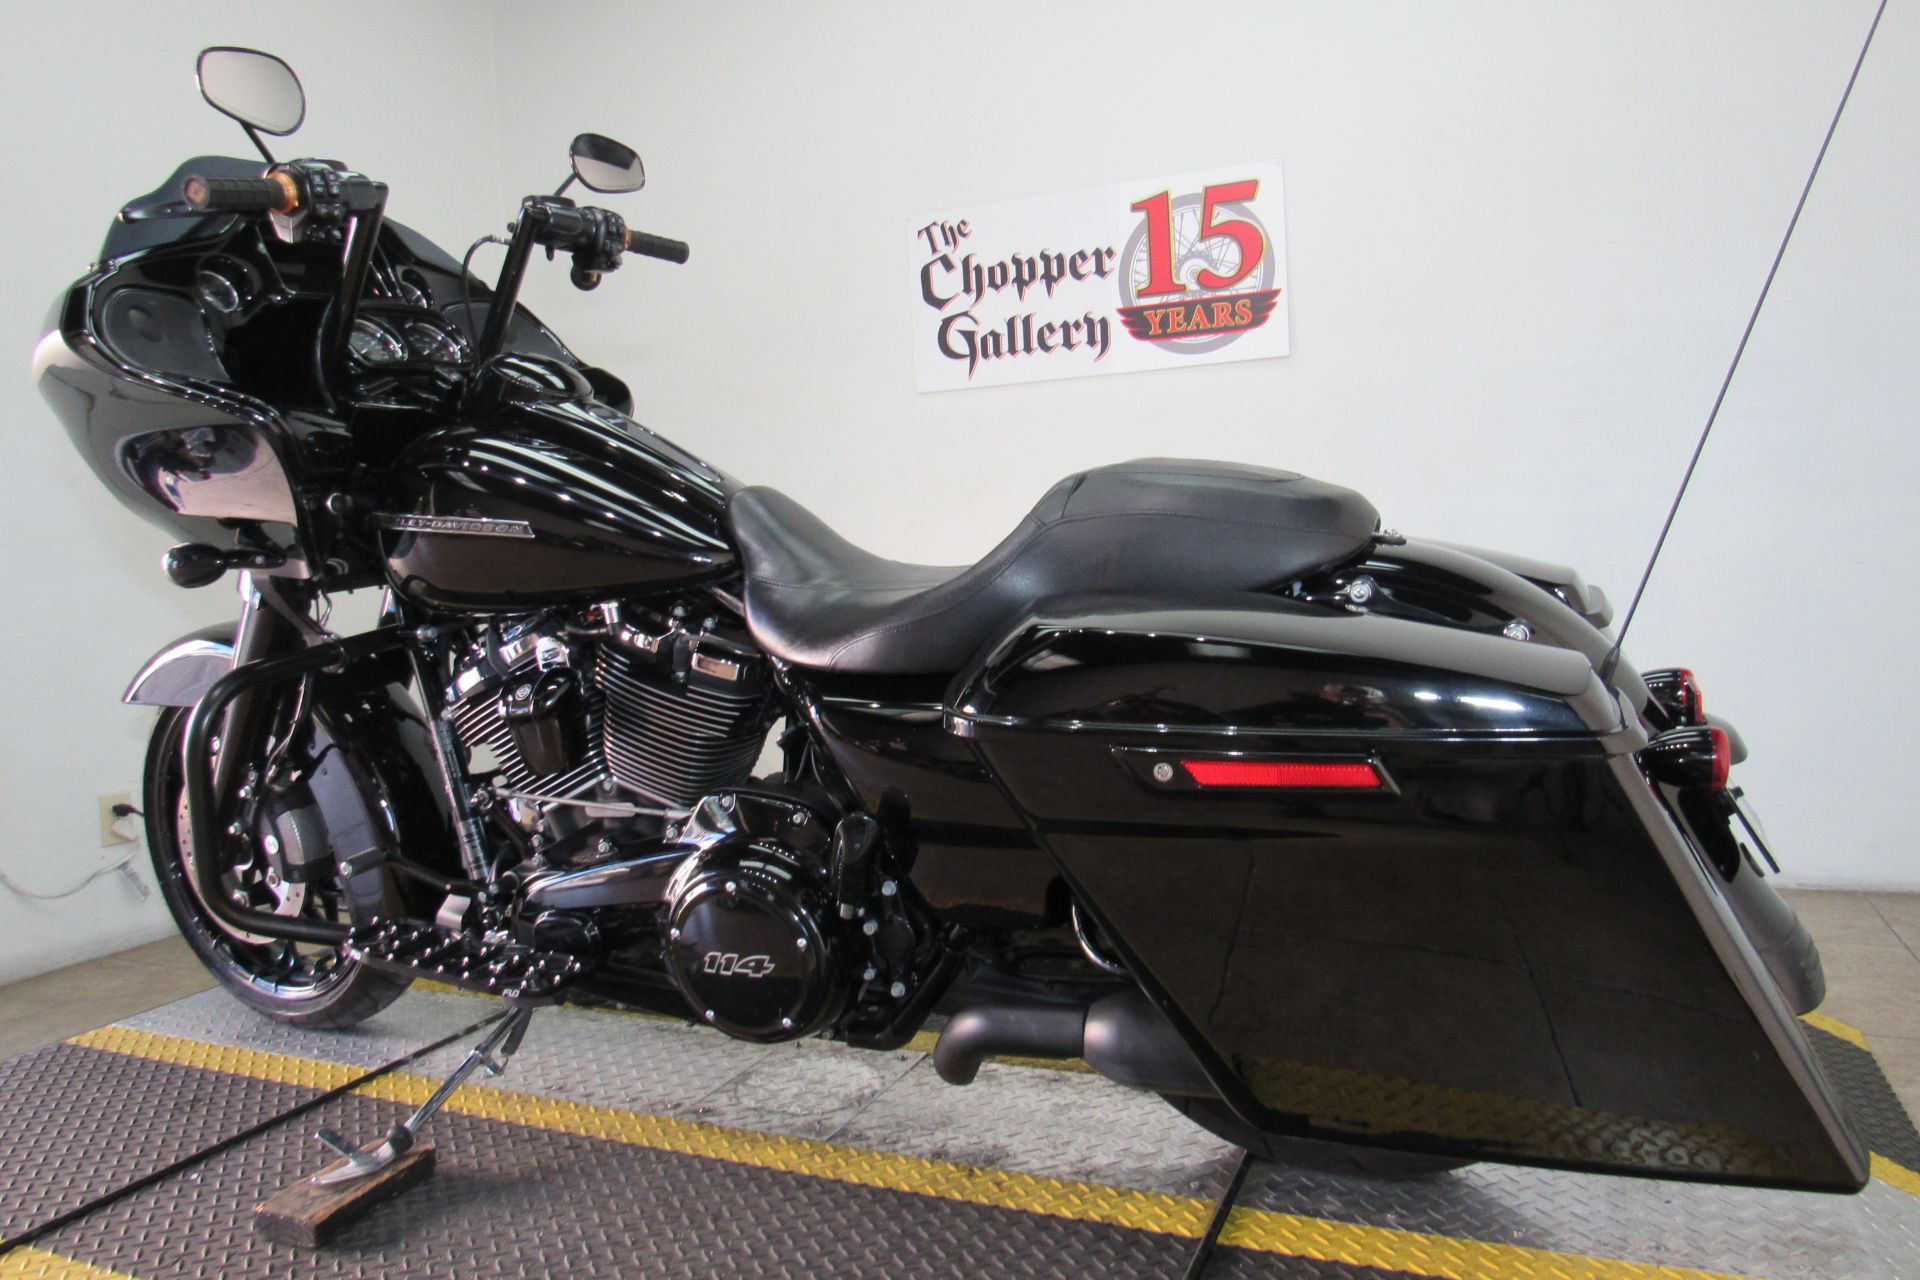 2020 Harley-Davidson Road Glide® Special in Temecula, California - Photo 38